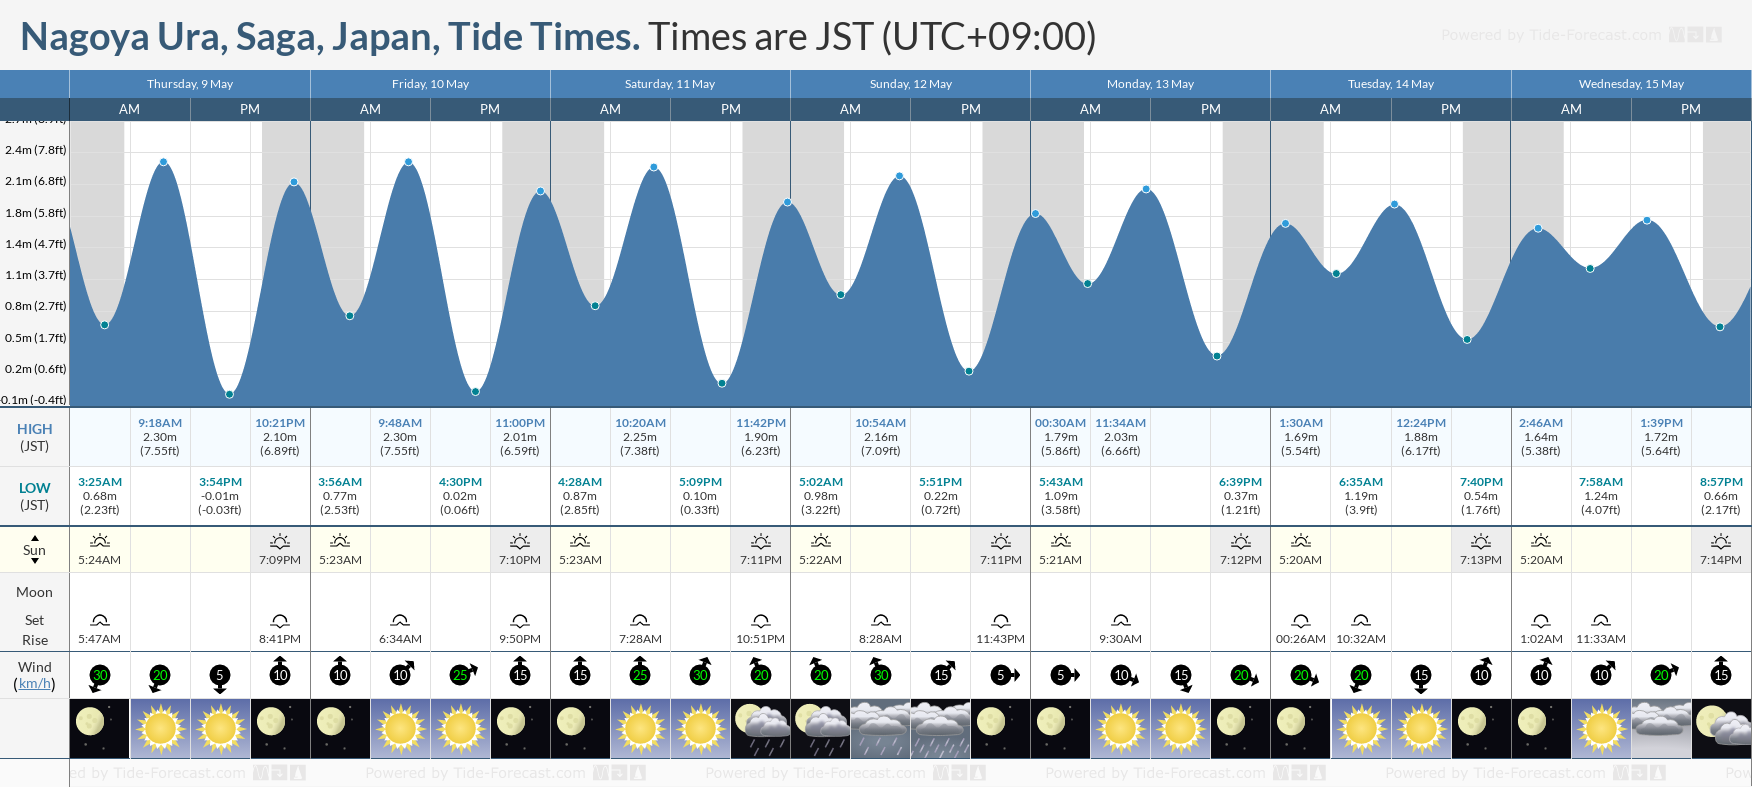 Nagoya Ura, Saga, Japan Tide Chart including high and low tide tide times for the next 7 days